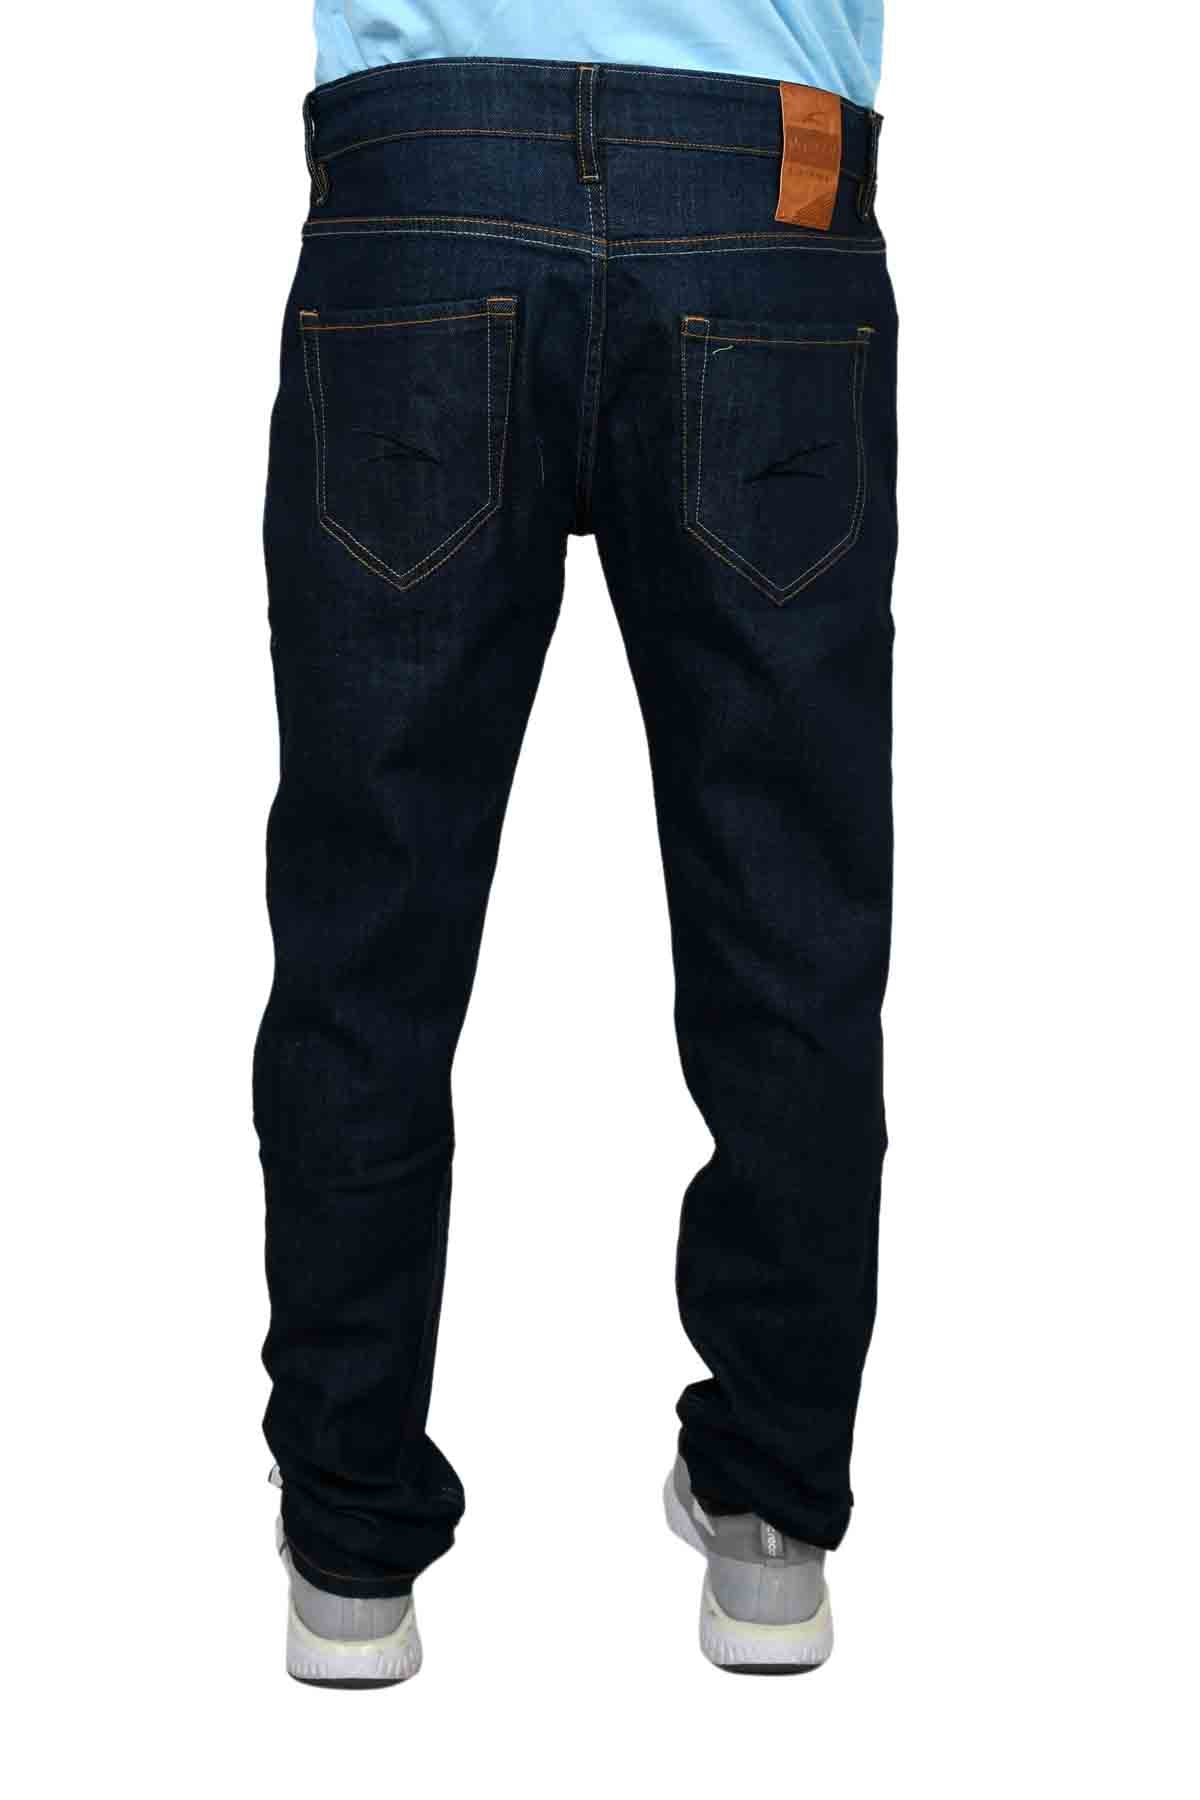 Men's Denim Jeans - Top Gun 1 Dark Blue